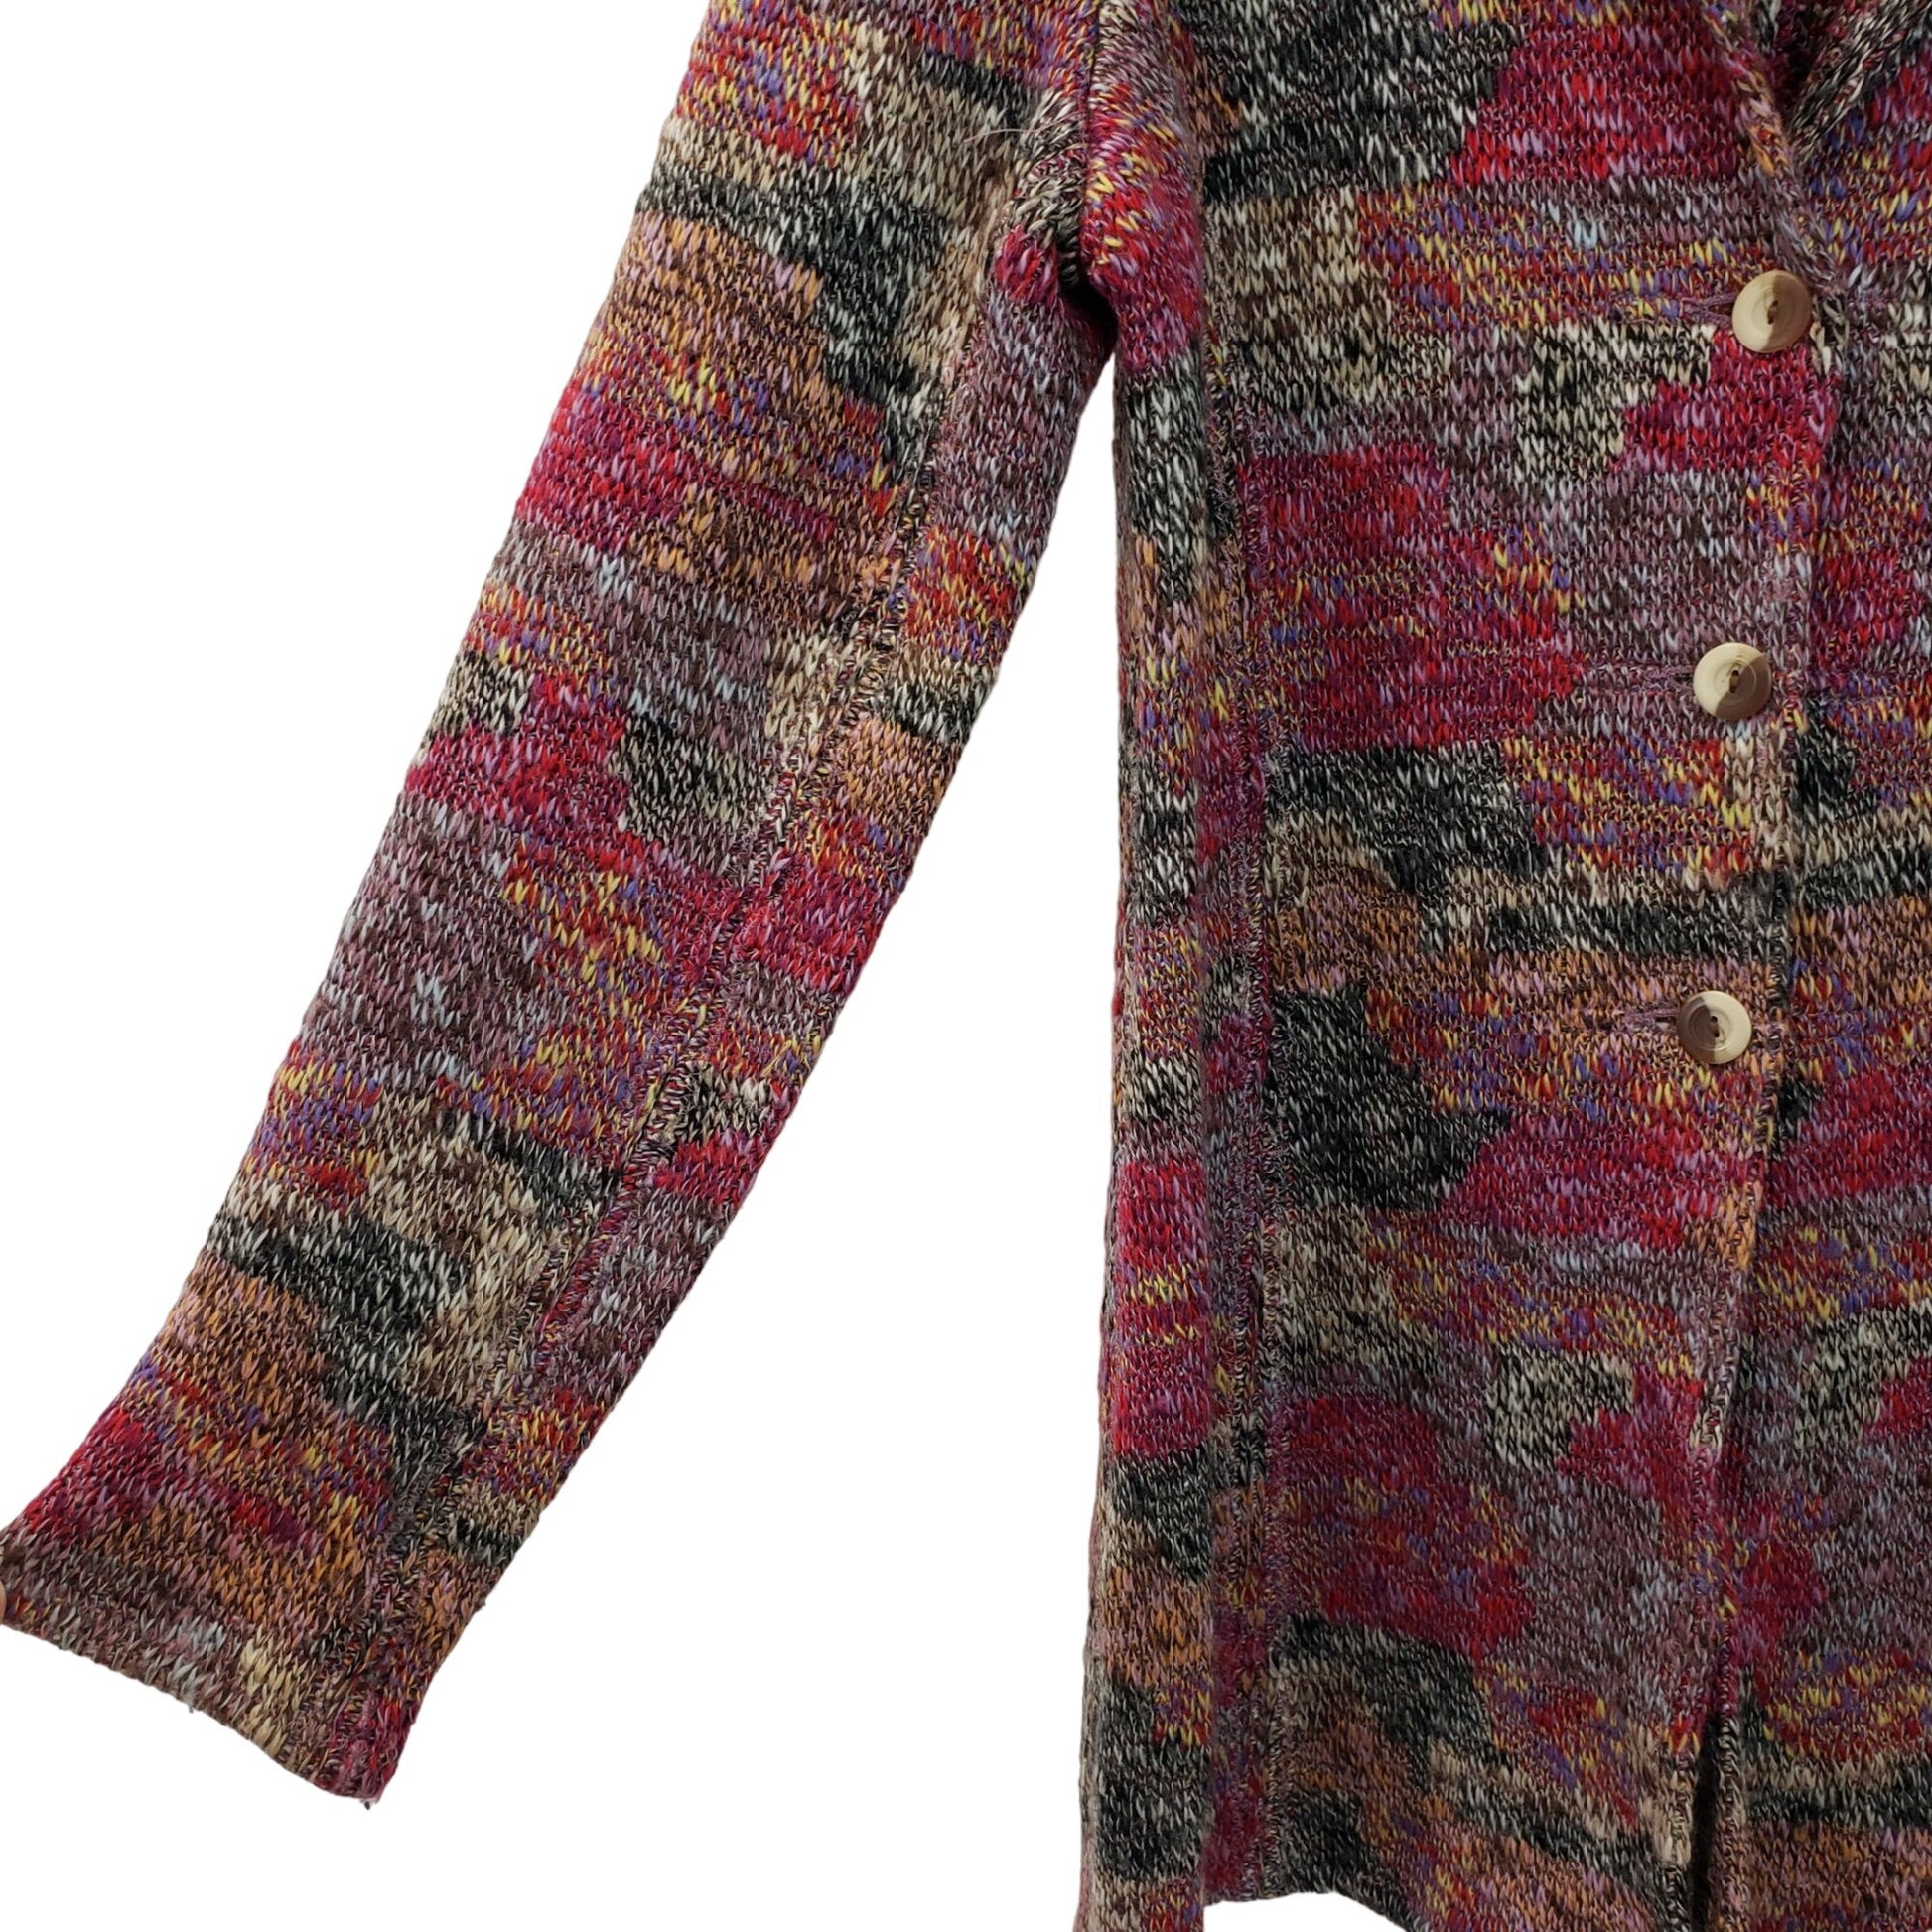 J. Jill Wool Blend One Button Cardigan Sweater Size Medium –